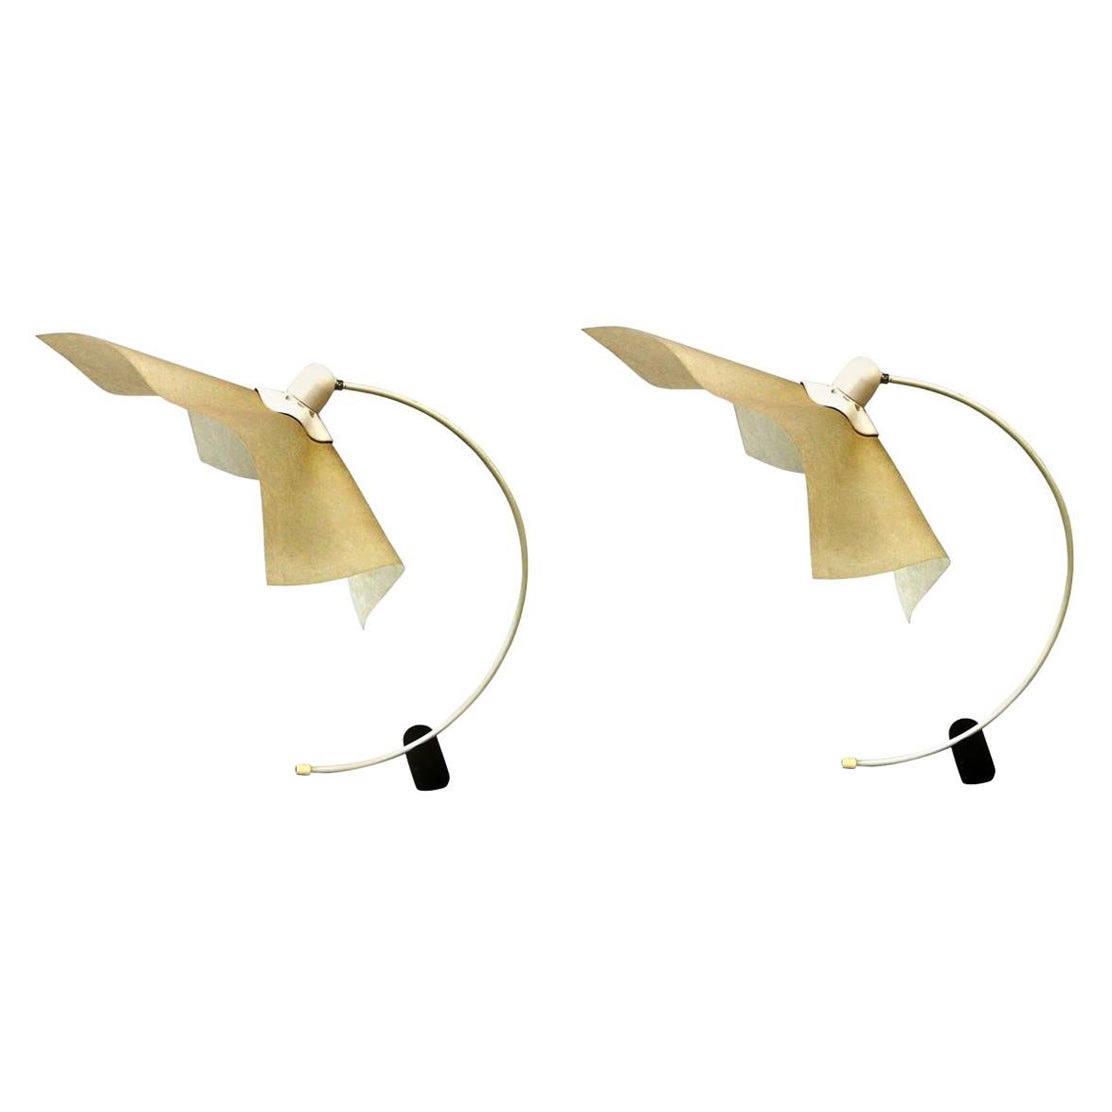 Mario Bellini Area Desk Lamp